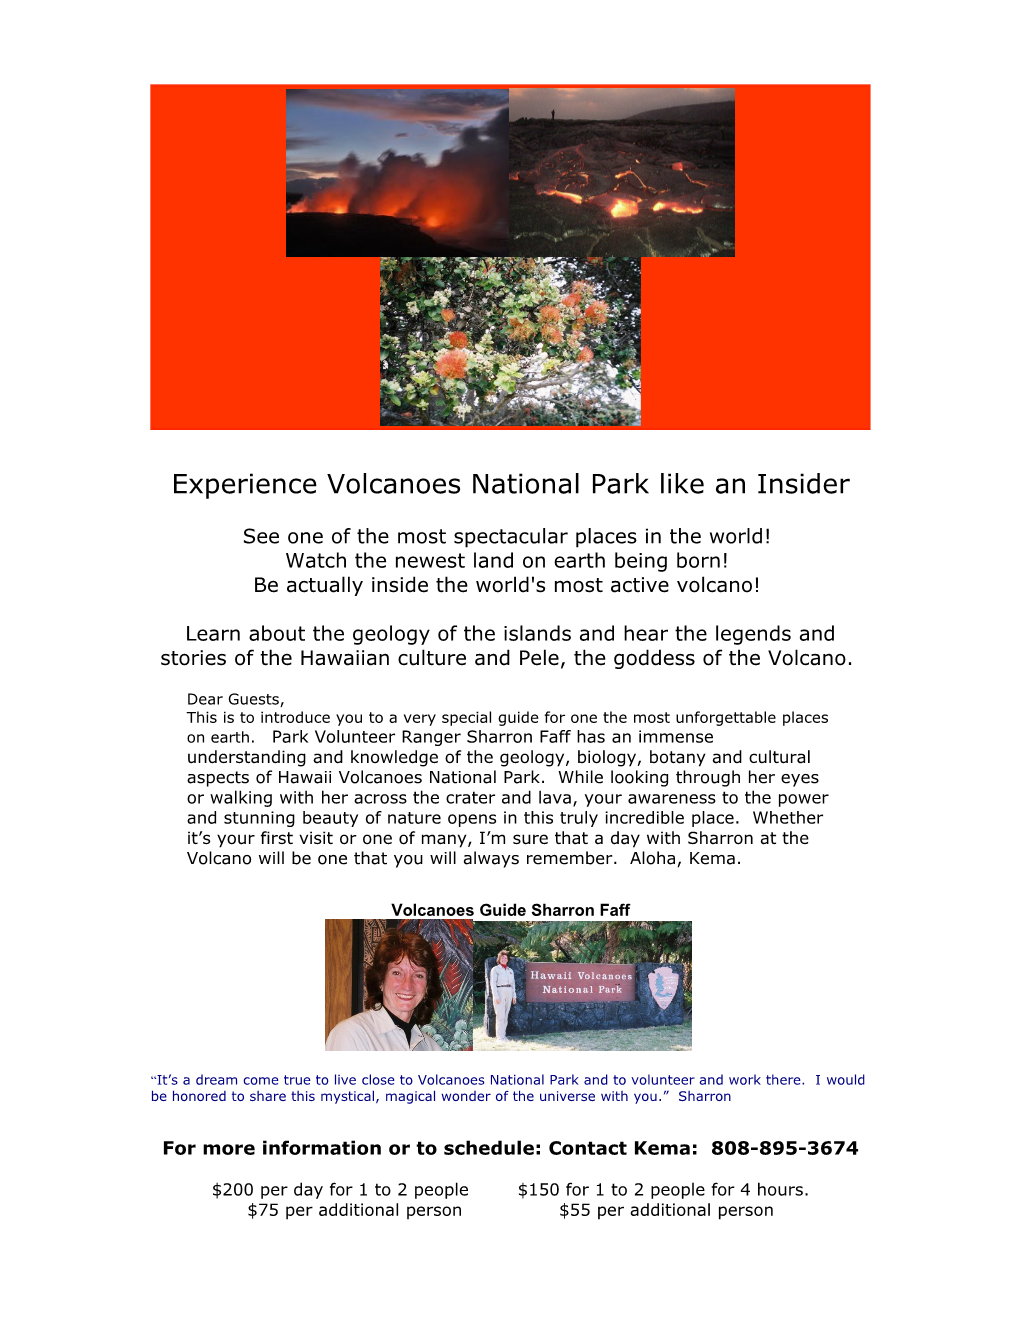 Experience Volcanoes National Park Like an Insider